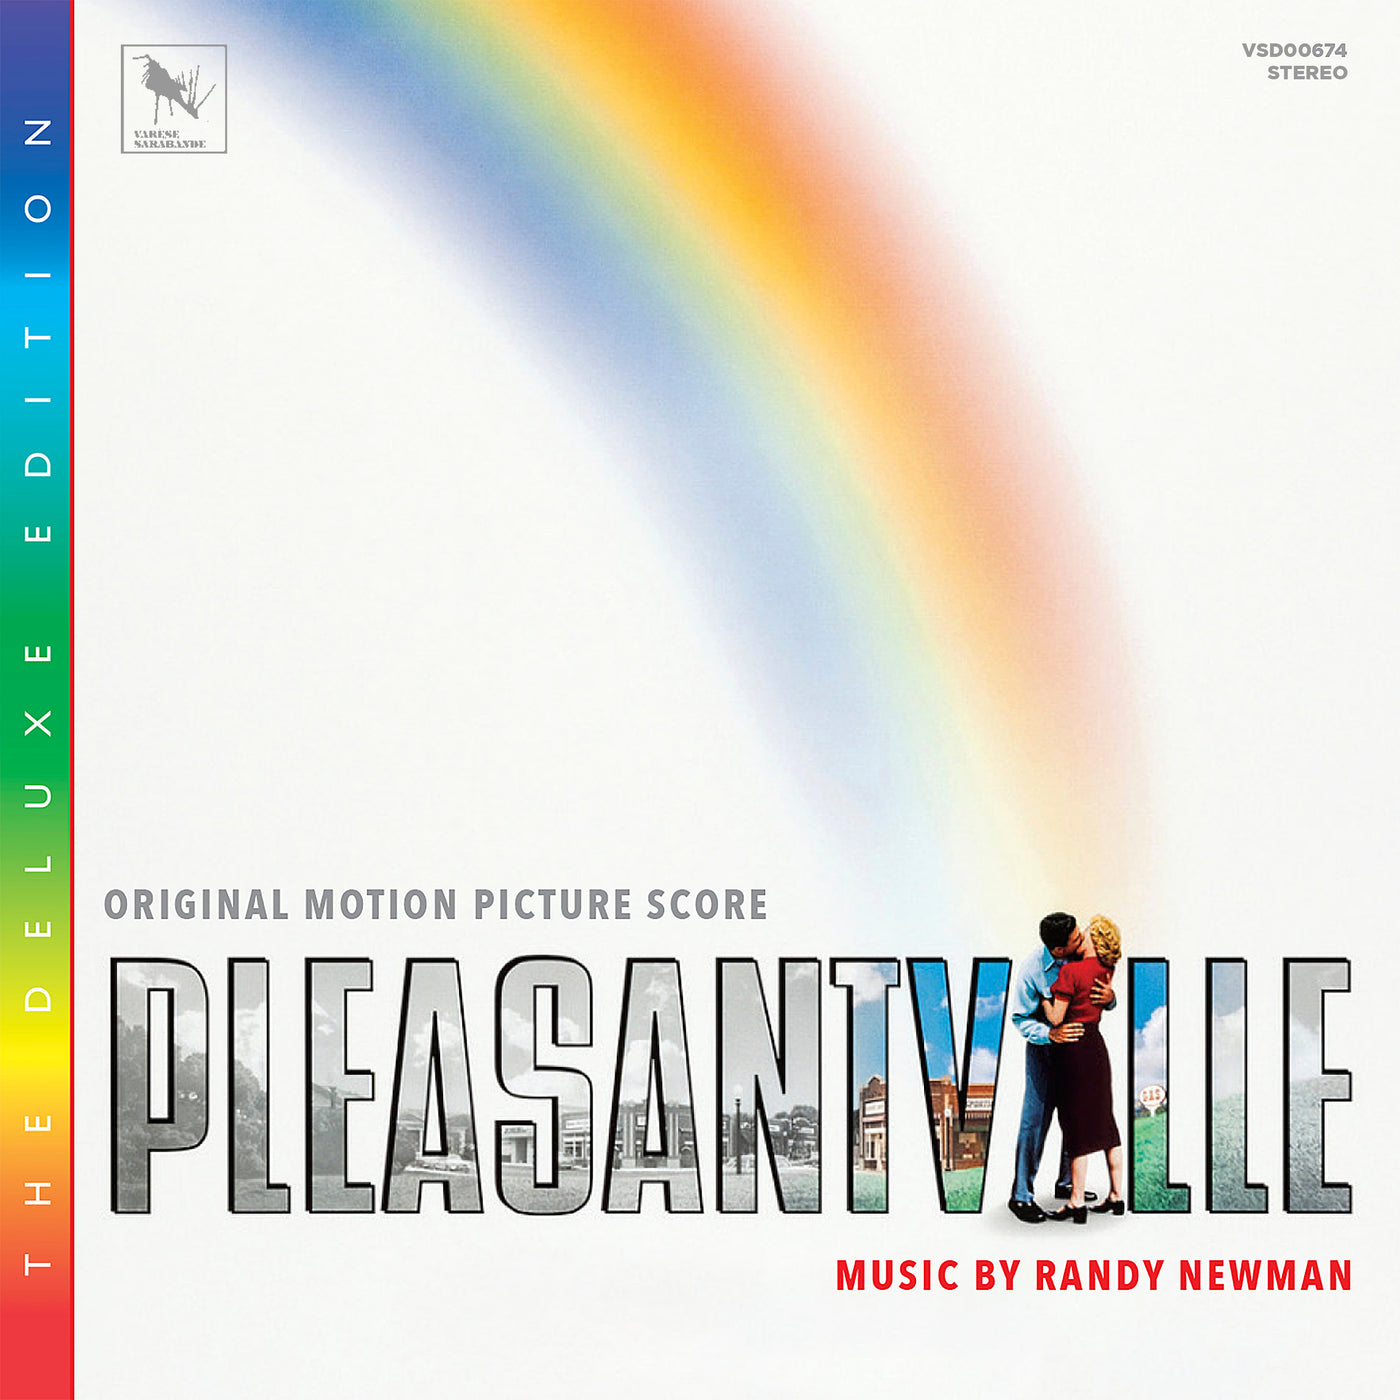 Randy Newman – Pleasantville (Original Motion Picture Score - Deluxe Edition) CD